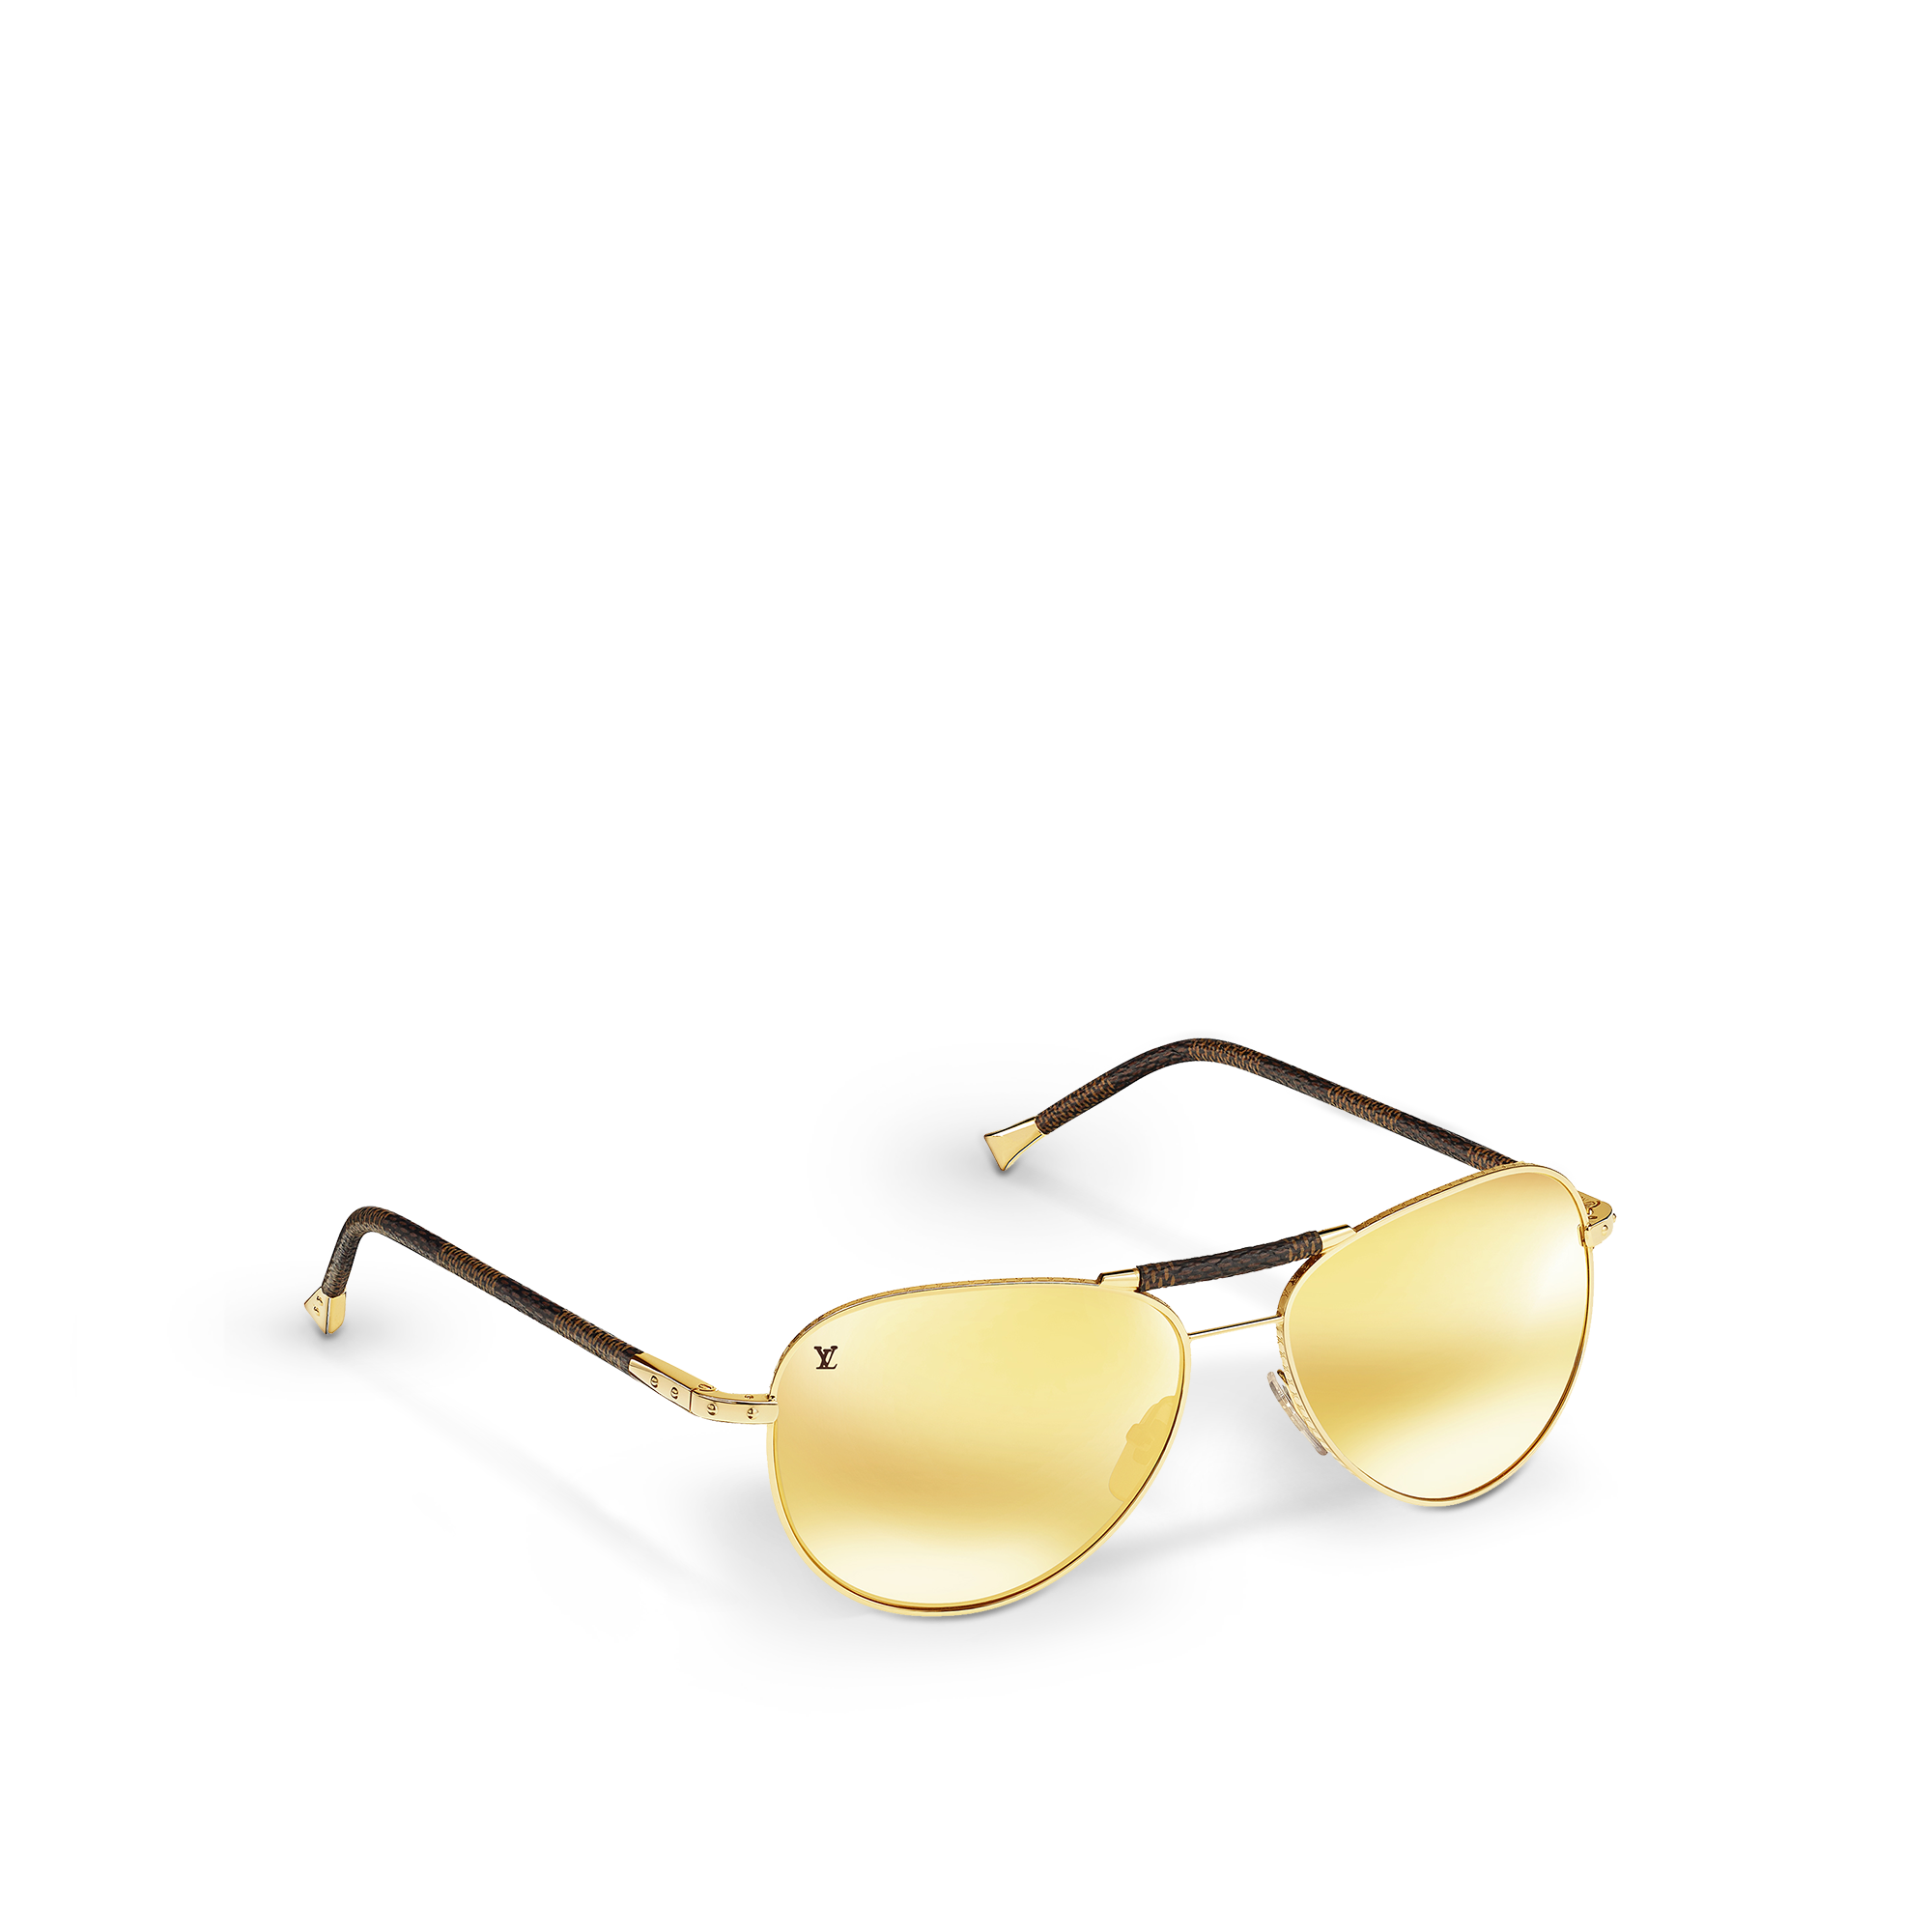 sunny clipart aviator sunglasses